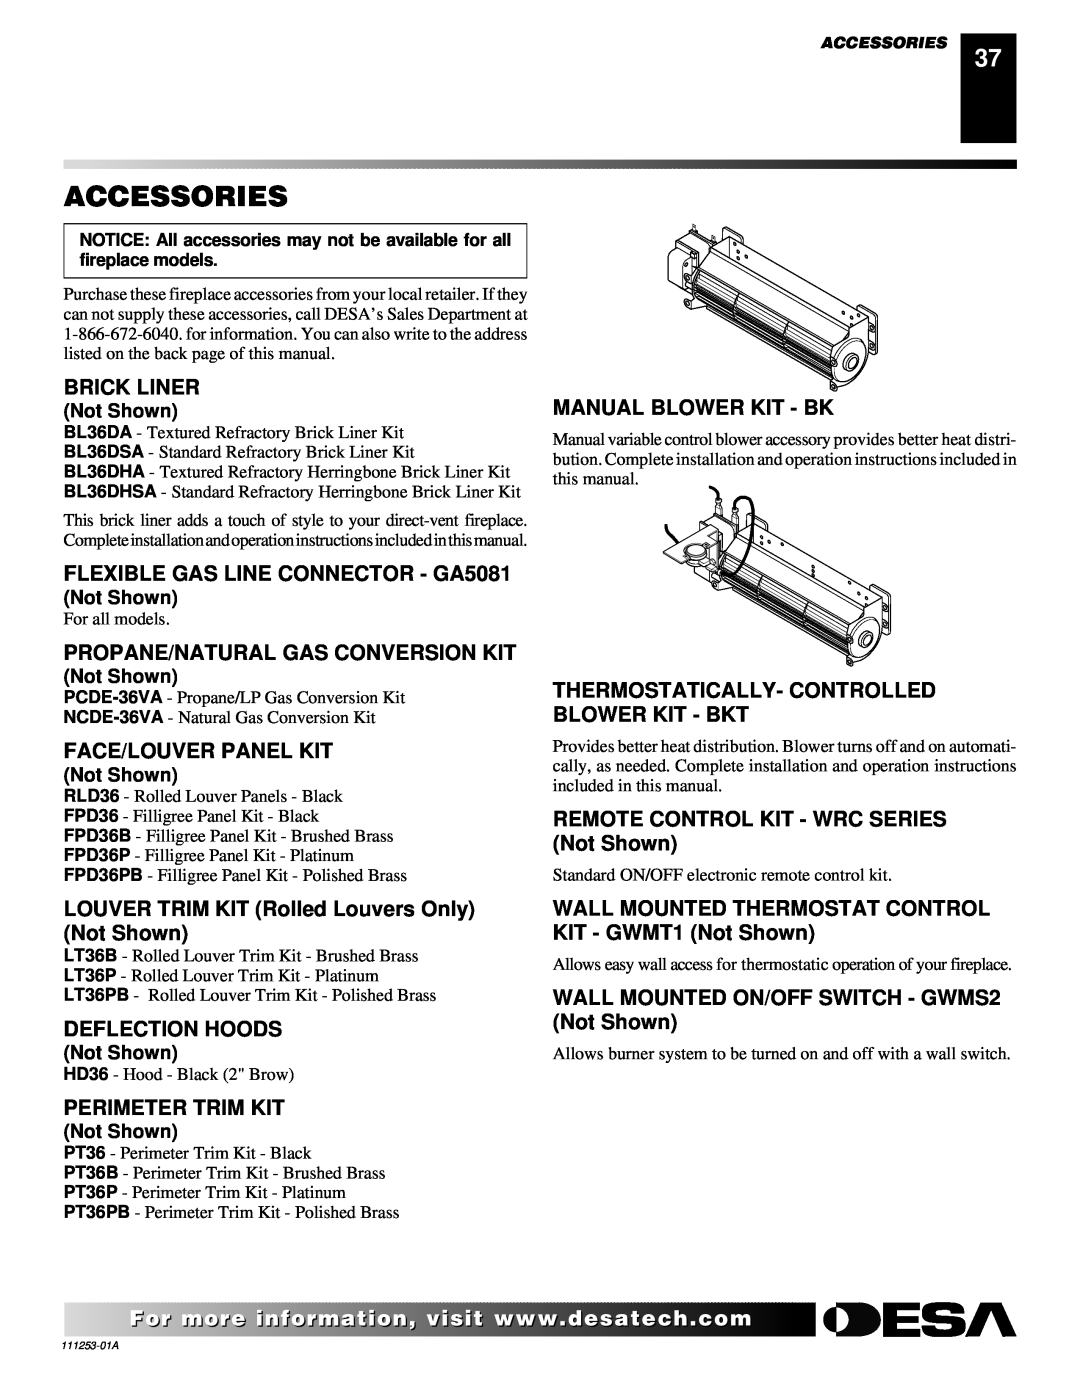 Desa (V)V36EPA(1) Accessories, Brick Liner, FLEXIBLE GAS LINE CONNECTOR - GA5081, Propane/Natural Gas Conversion Kit 